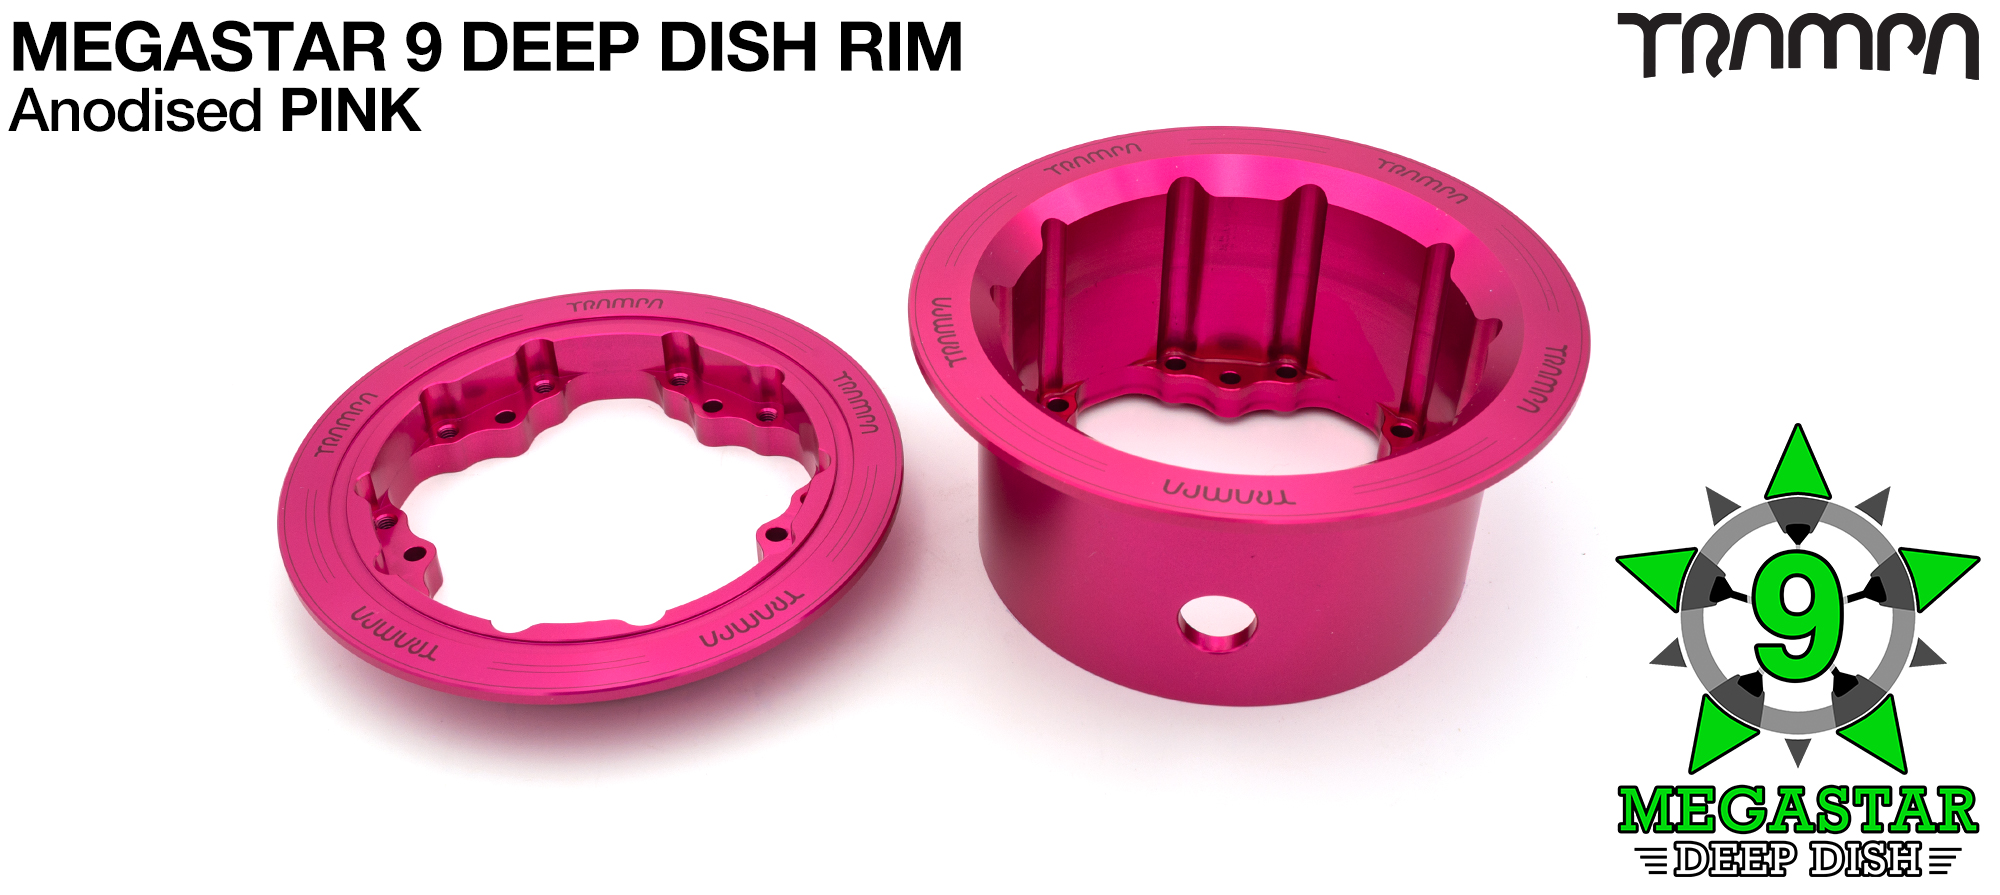 DEEP-DISH MEGASTAR 9 Rims - PINK